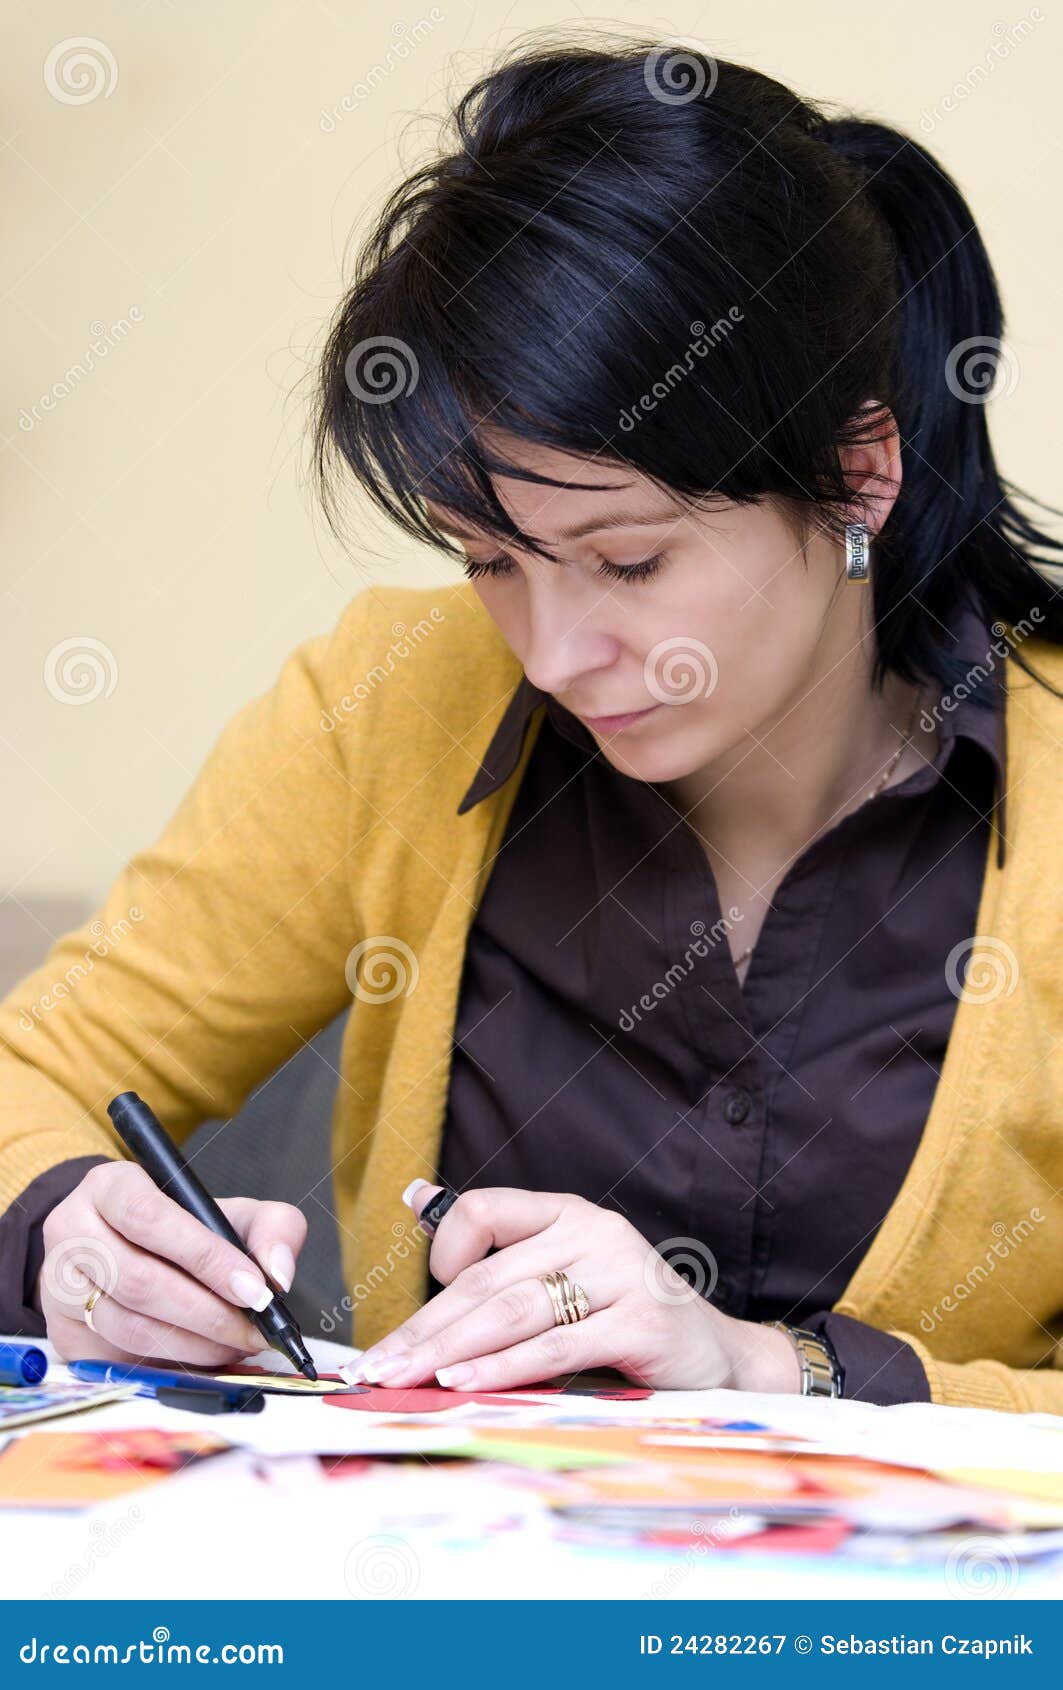 Woman drawing artwork stock image. Image of artwork, inside - 24282267